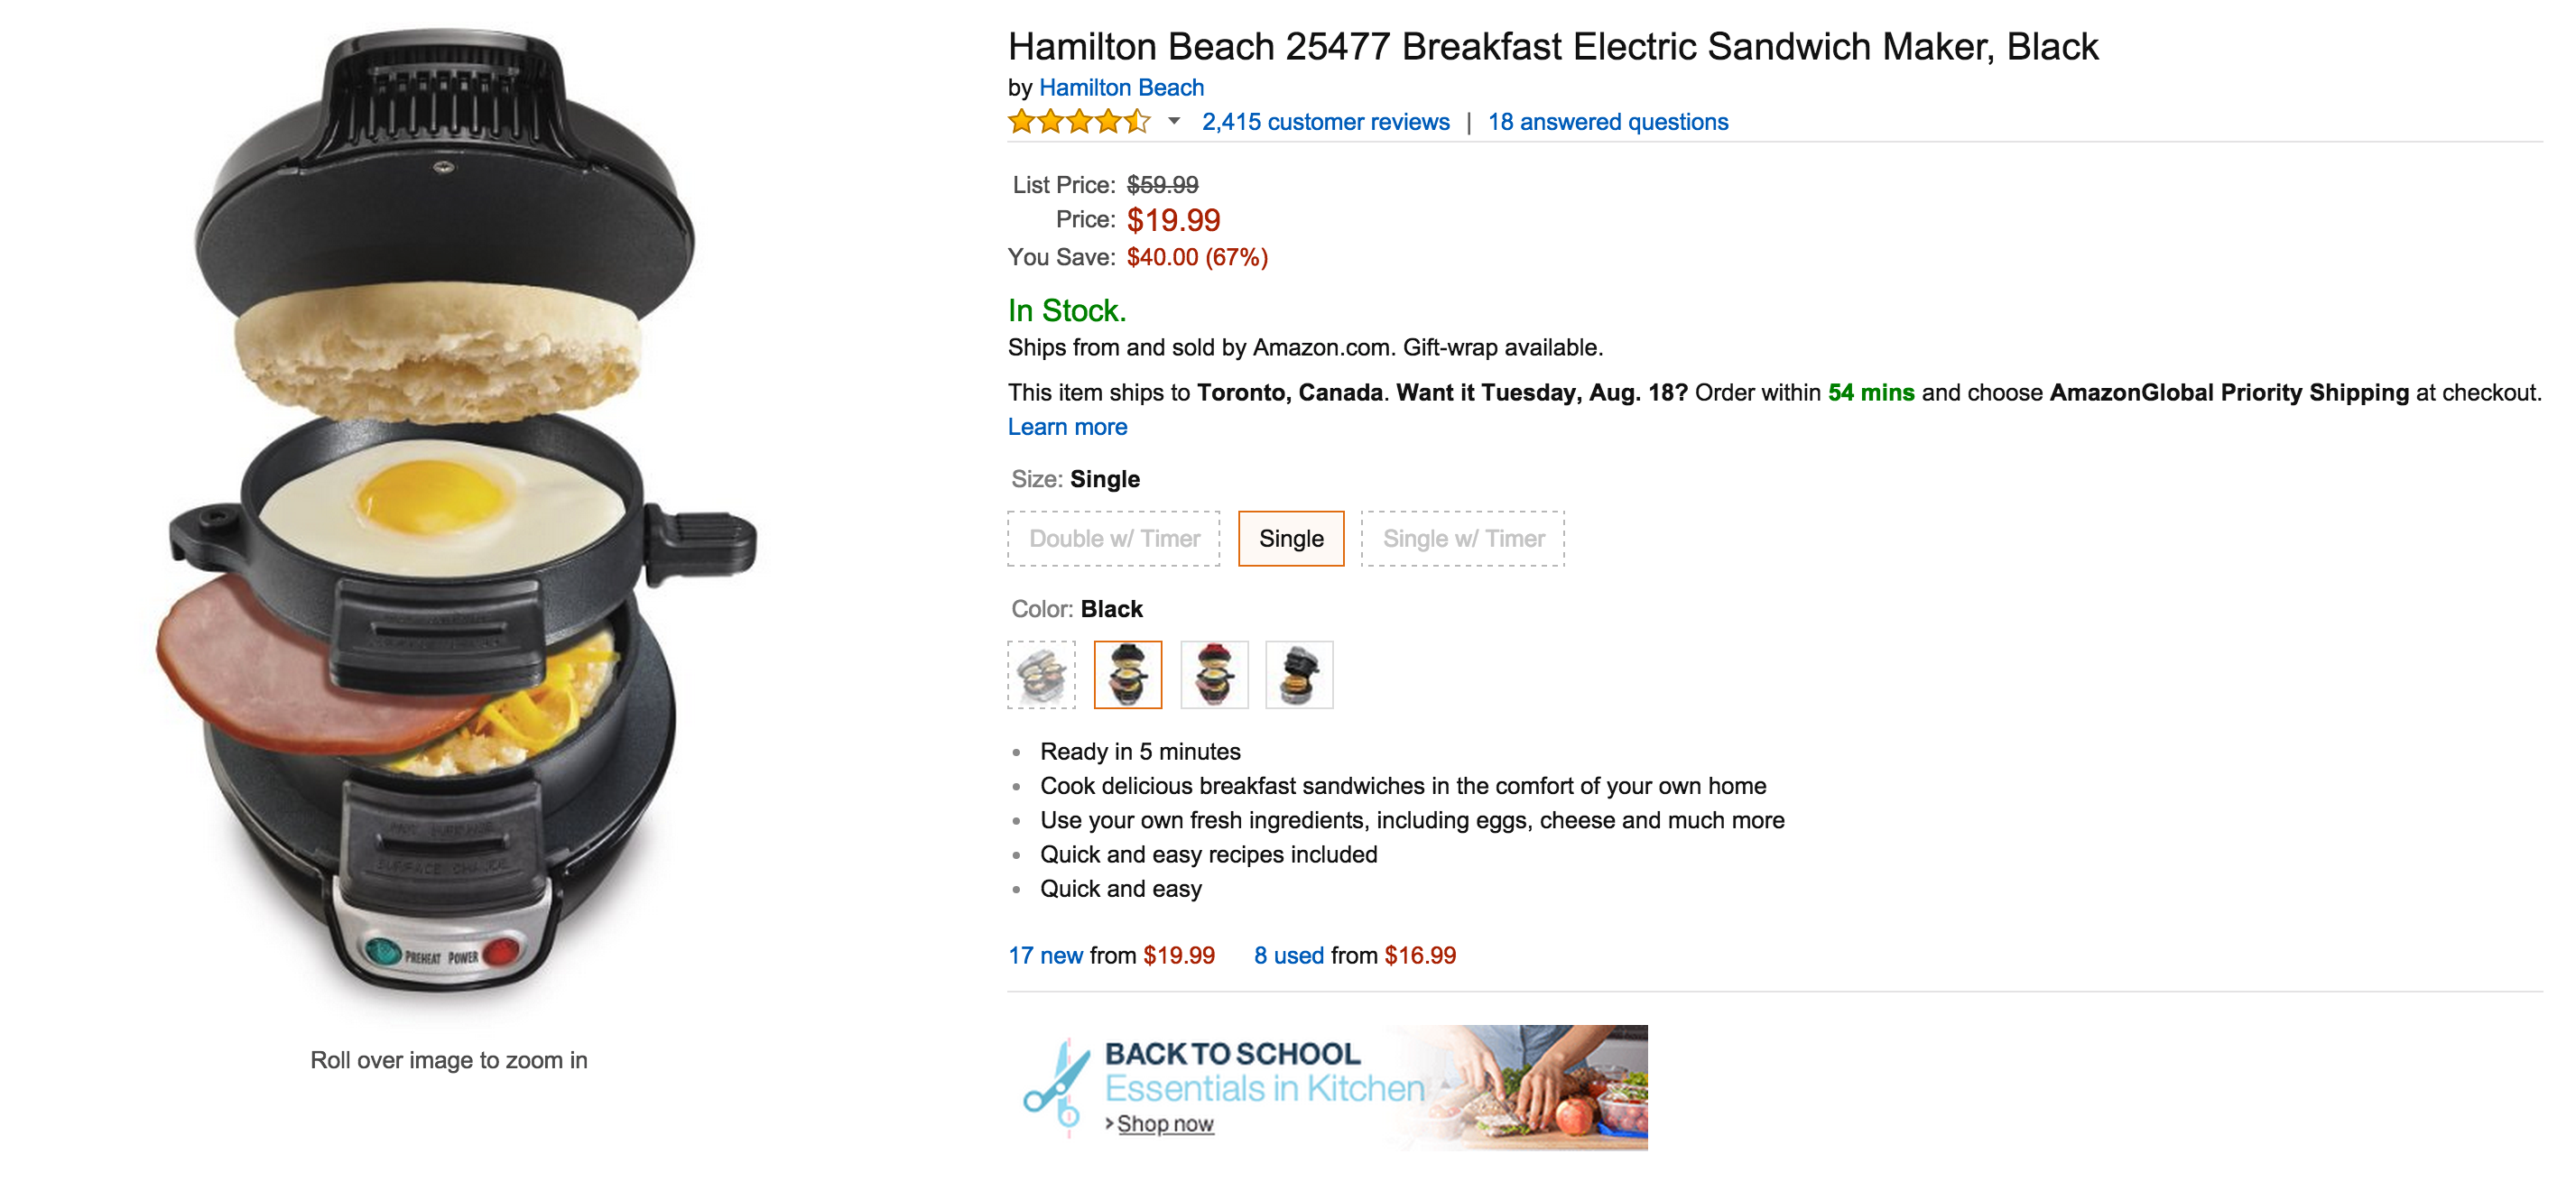 Hamilton Beach 25477 Breakfast Electric Sandwich Maker Black